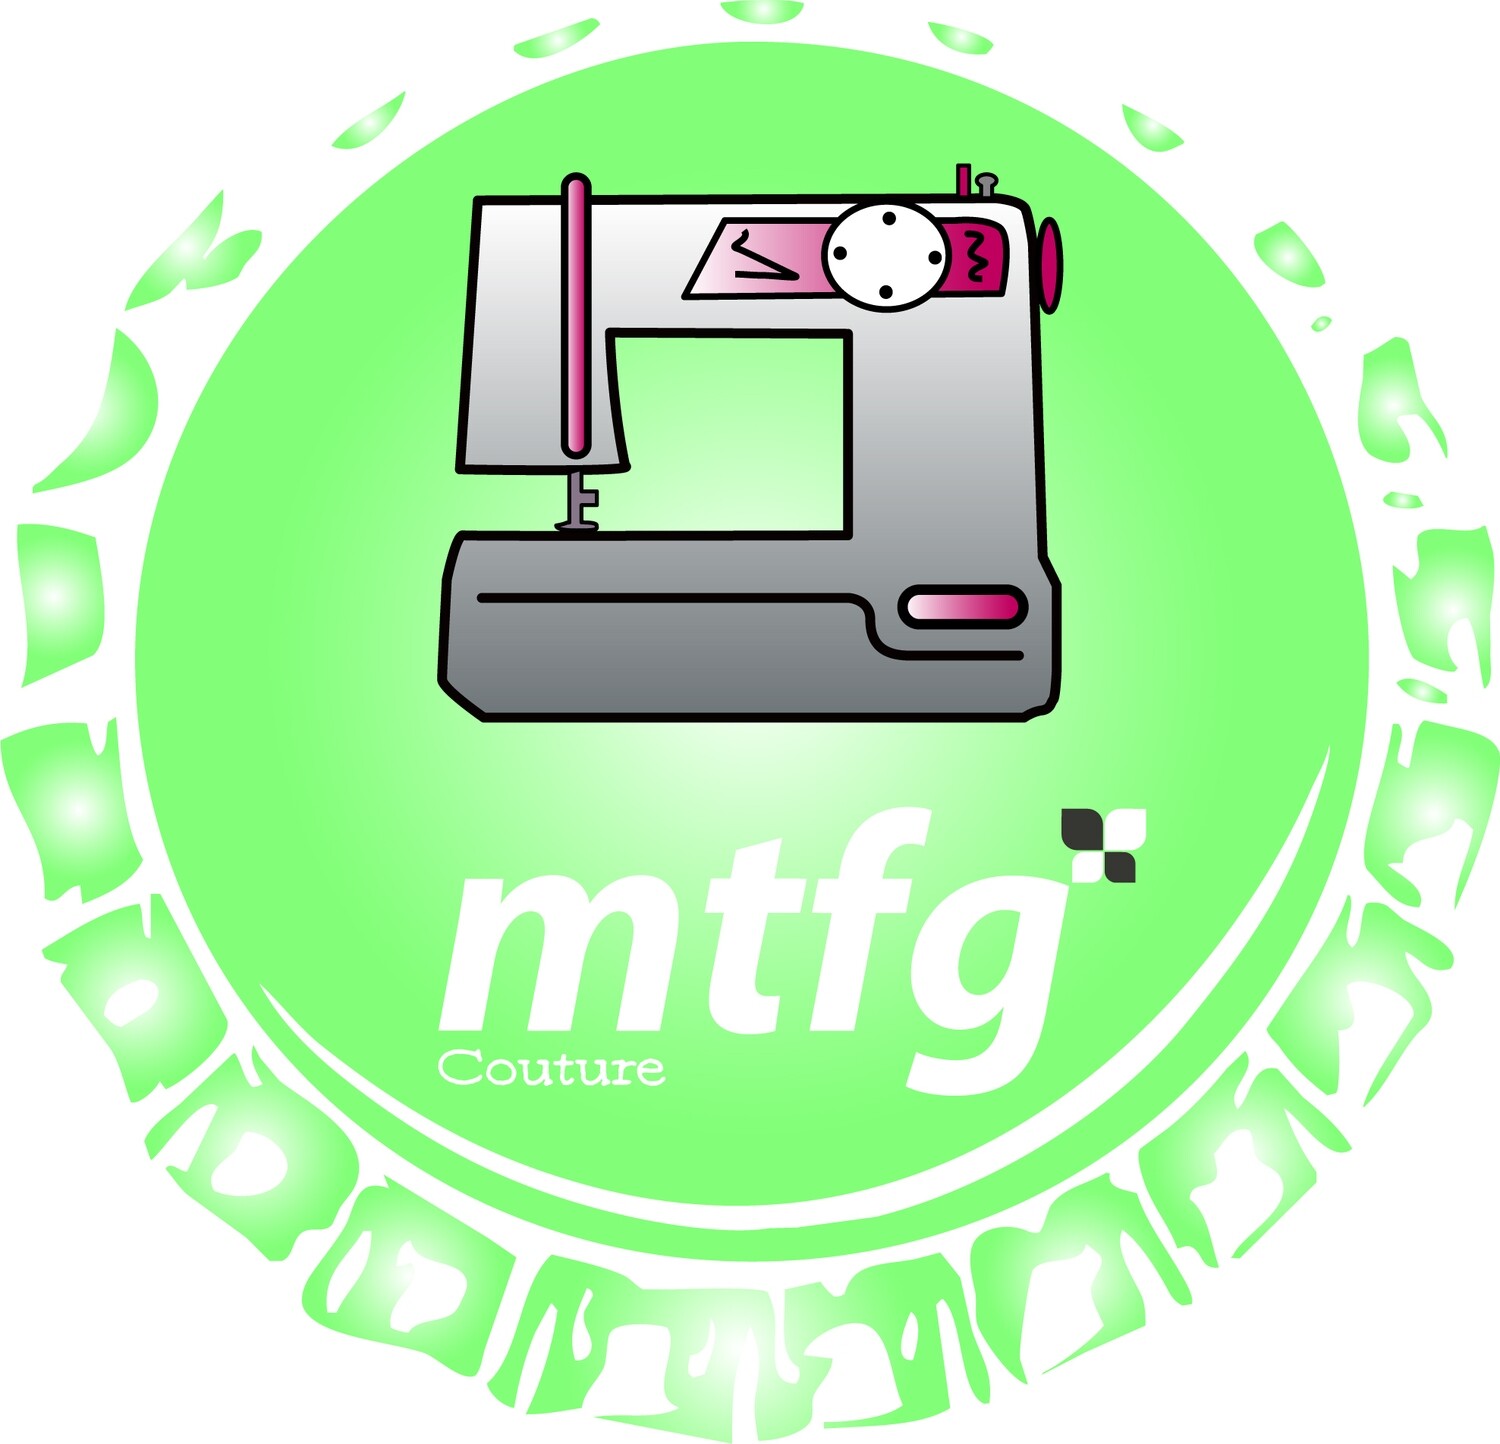 MTFG Couture - SAV - réparations